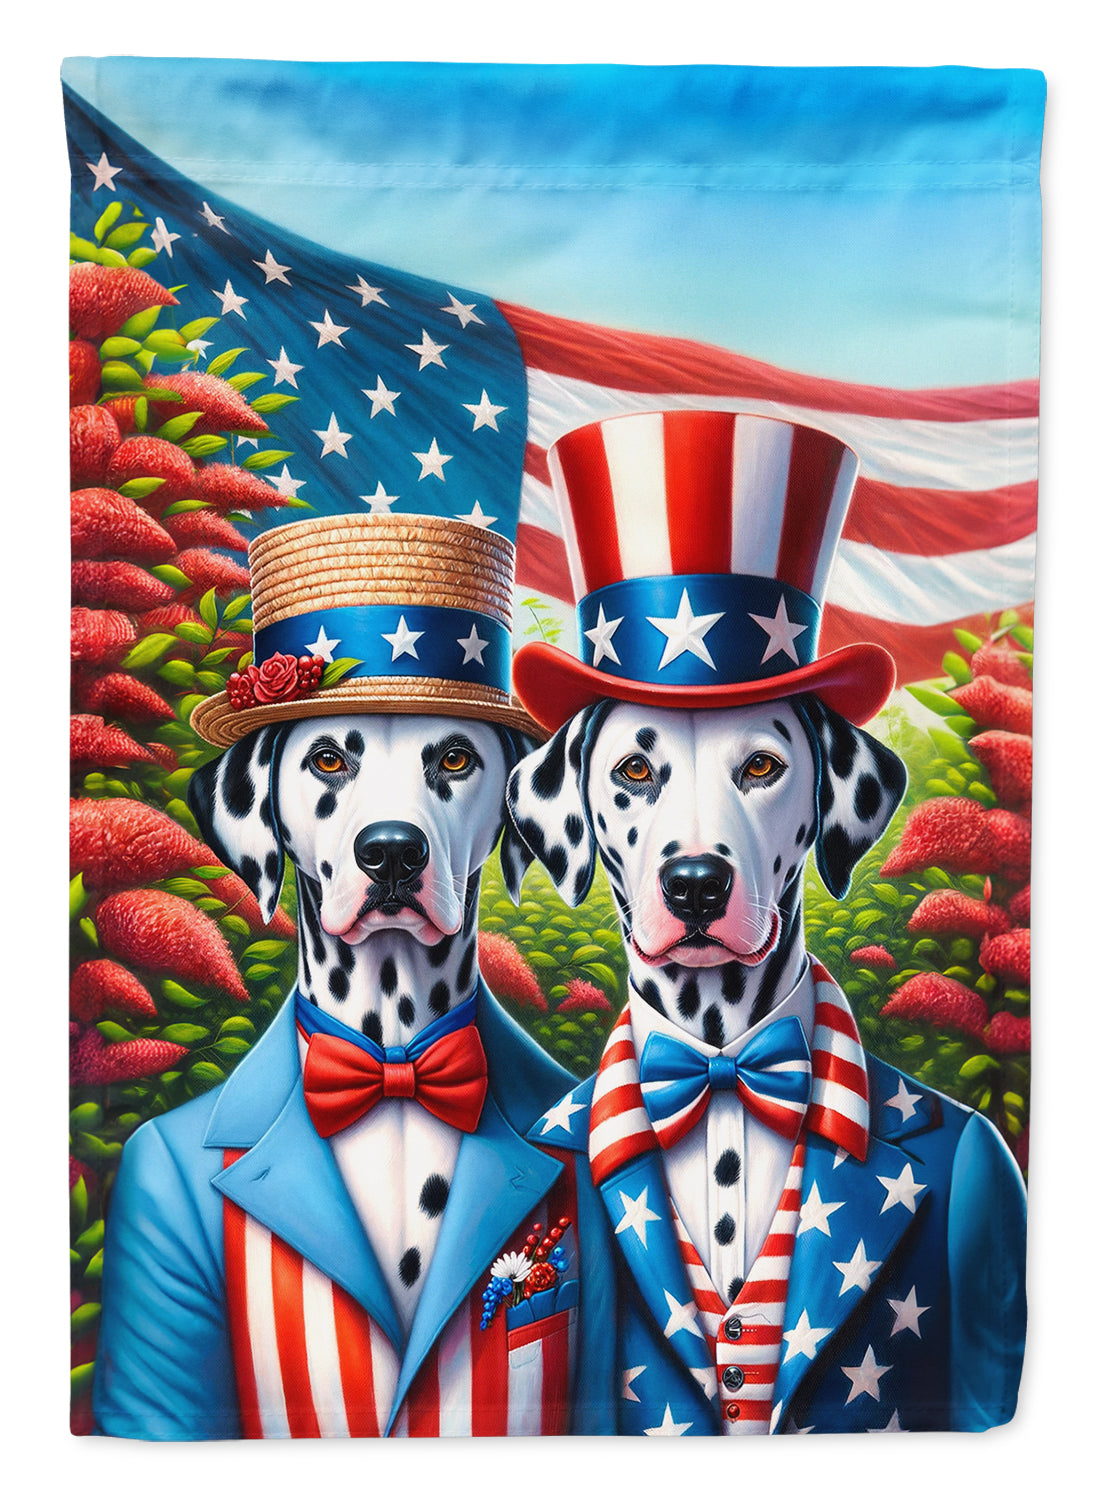 Buy this All American Dalmatian Garden Flag